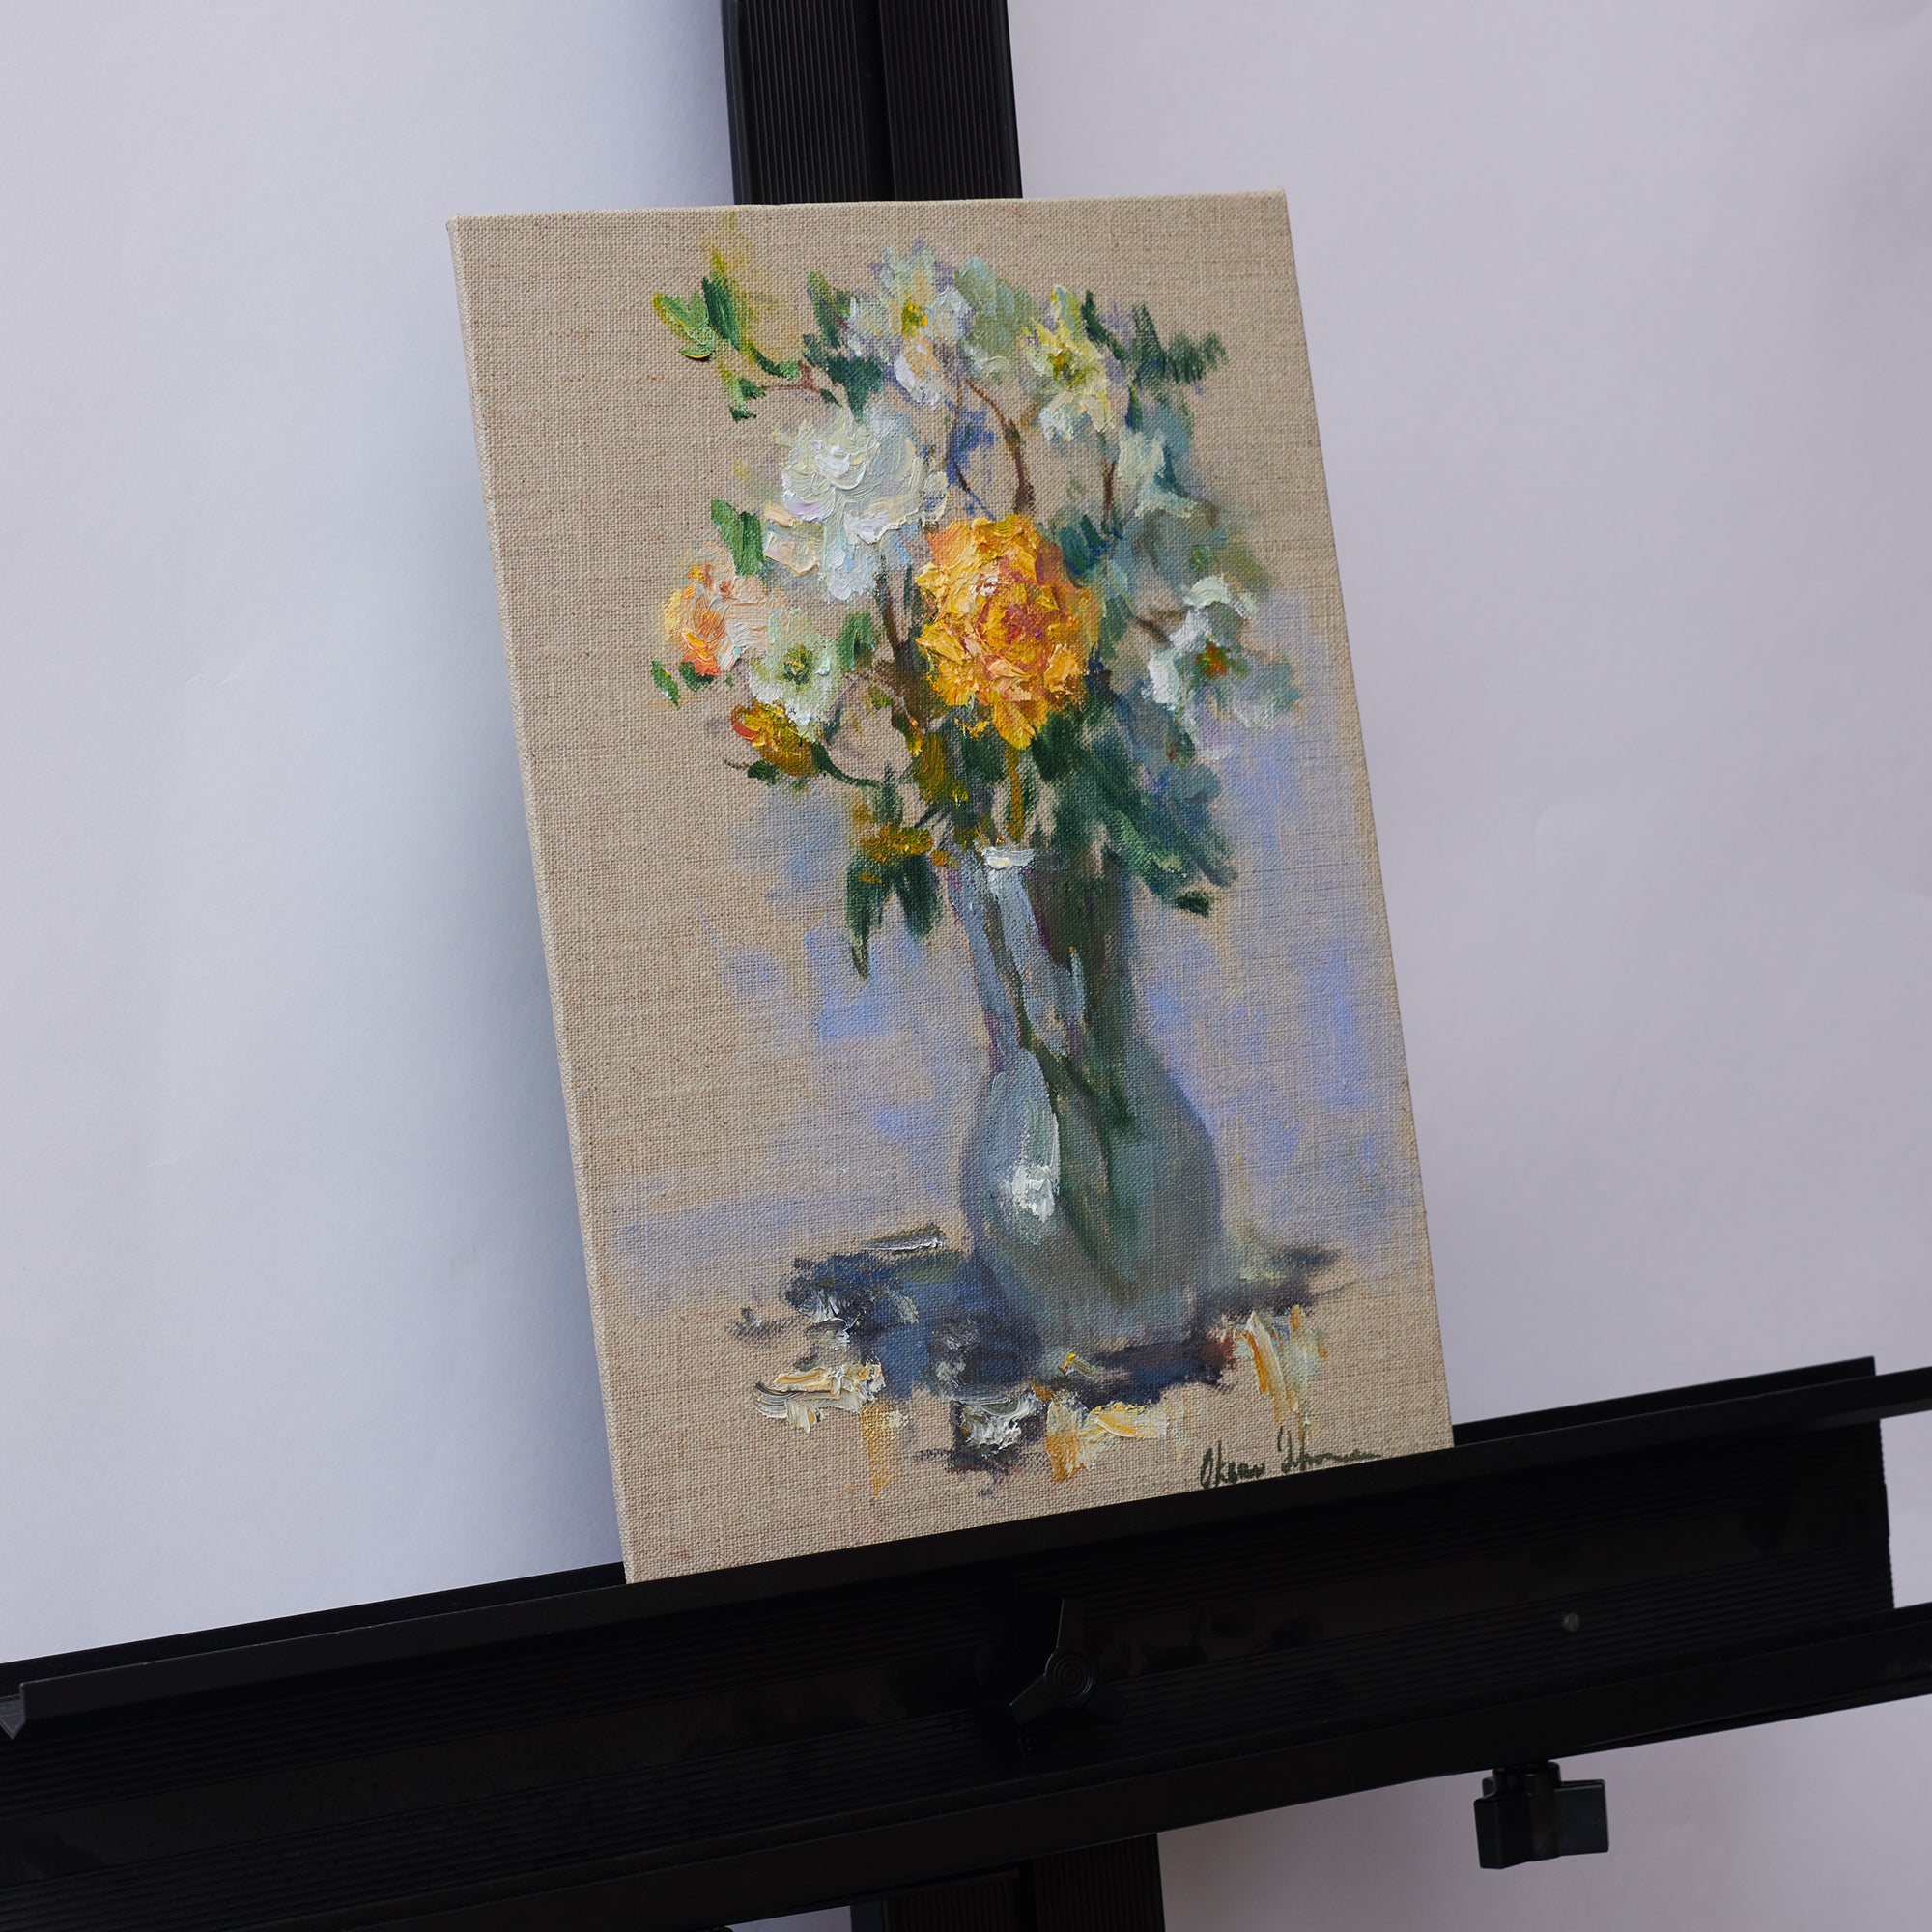 Oksana-Johnson-Oil-Painting-9x12-inches-Yellow-Rose-Vase-on-Canvas